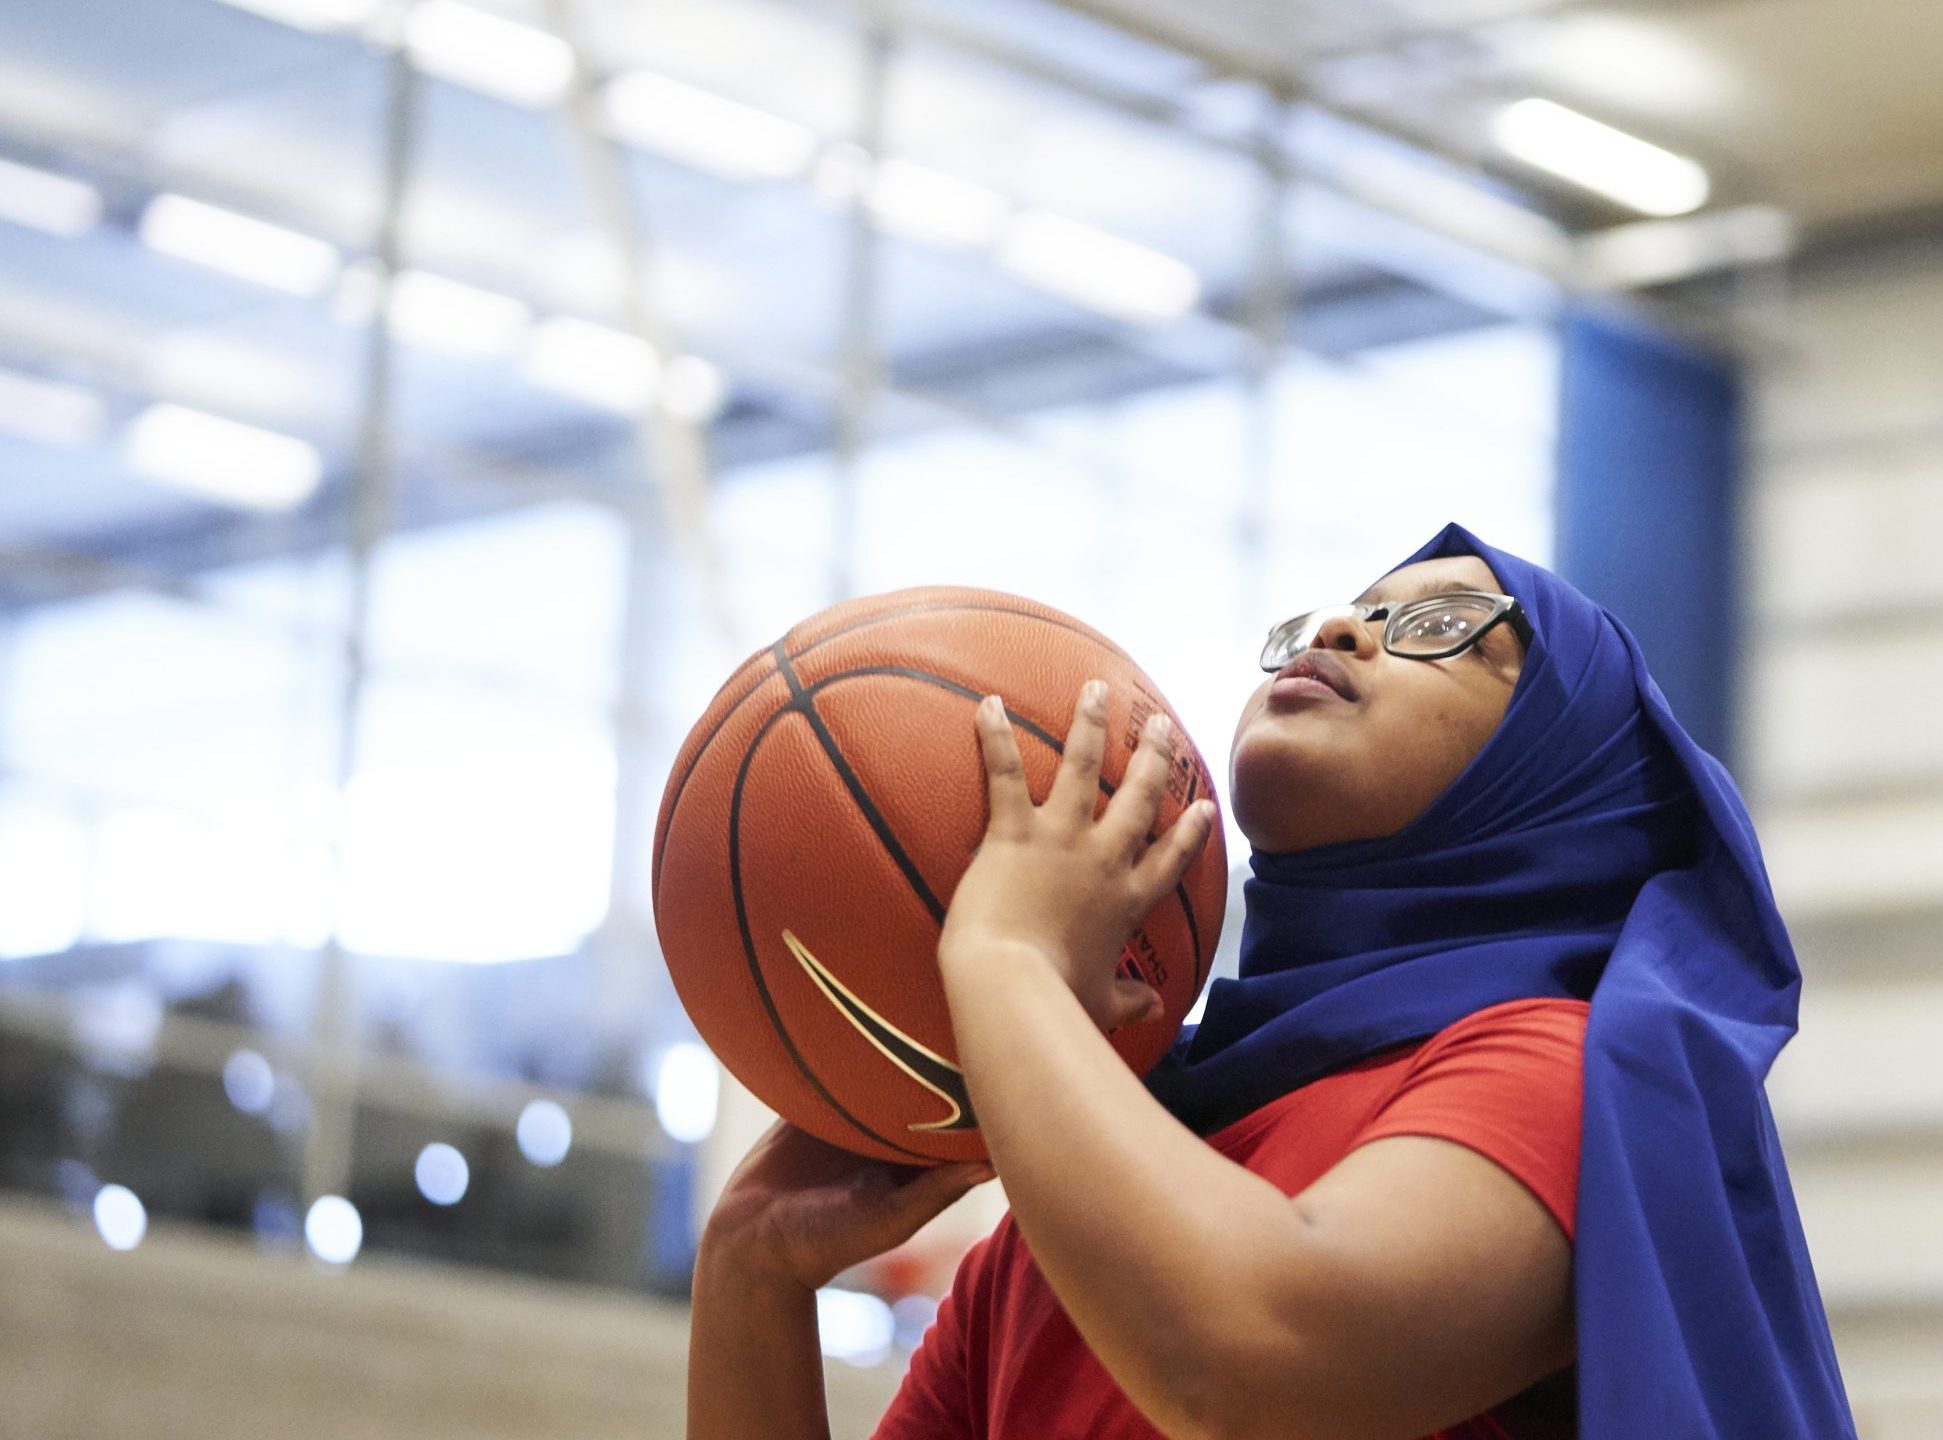 Teenage girl wearing headscarf shooting the ball in basketball